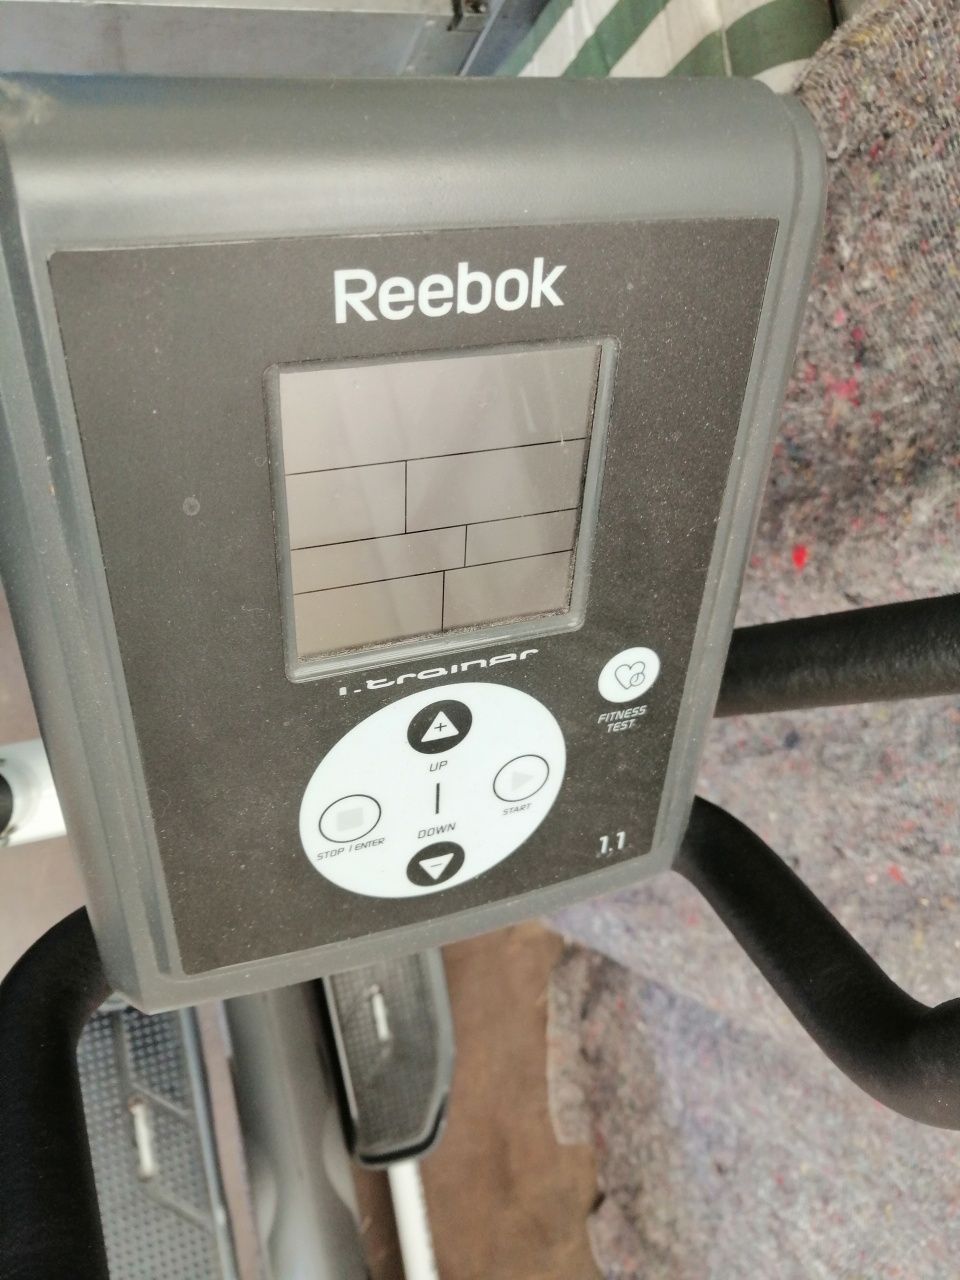 Reebok i-trainer 1.1 REGF-14200 orbitrek